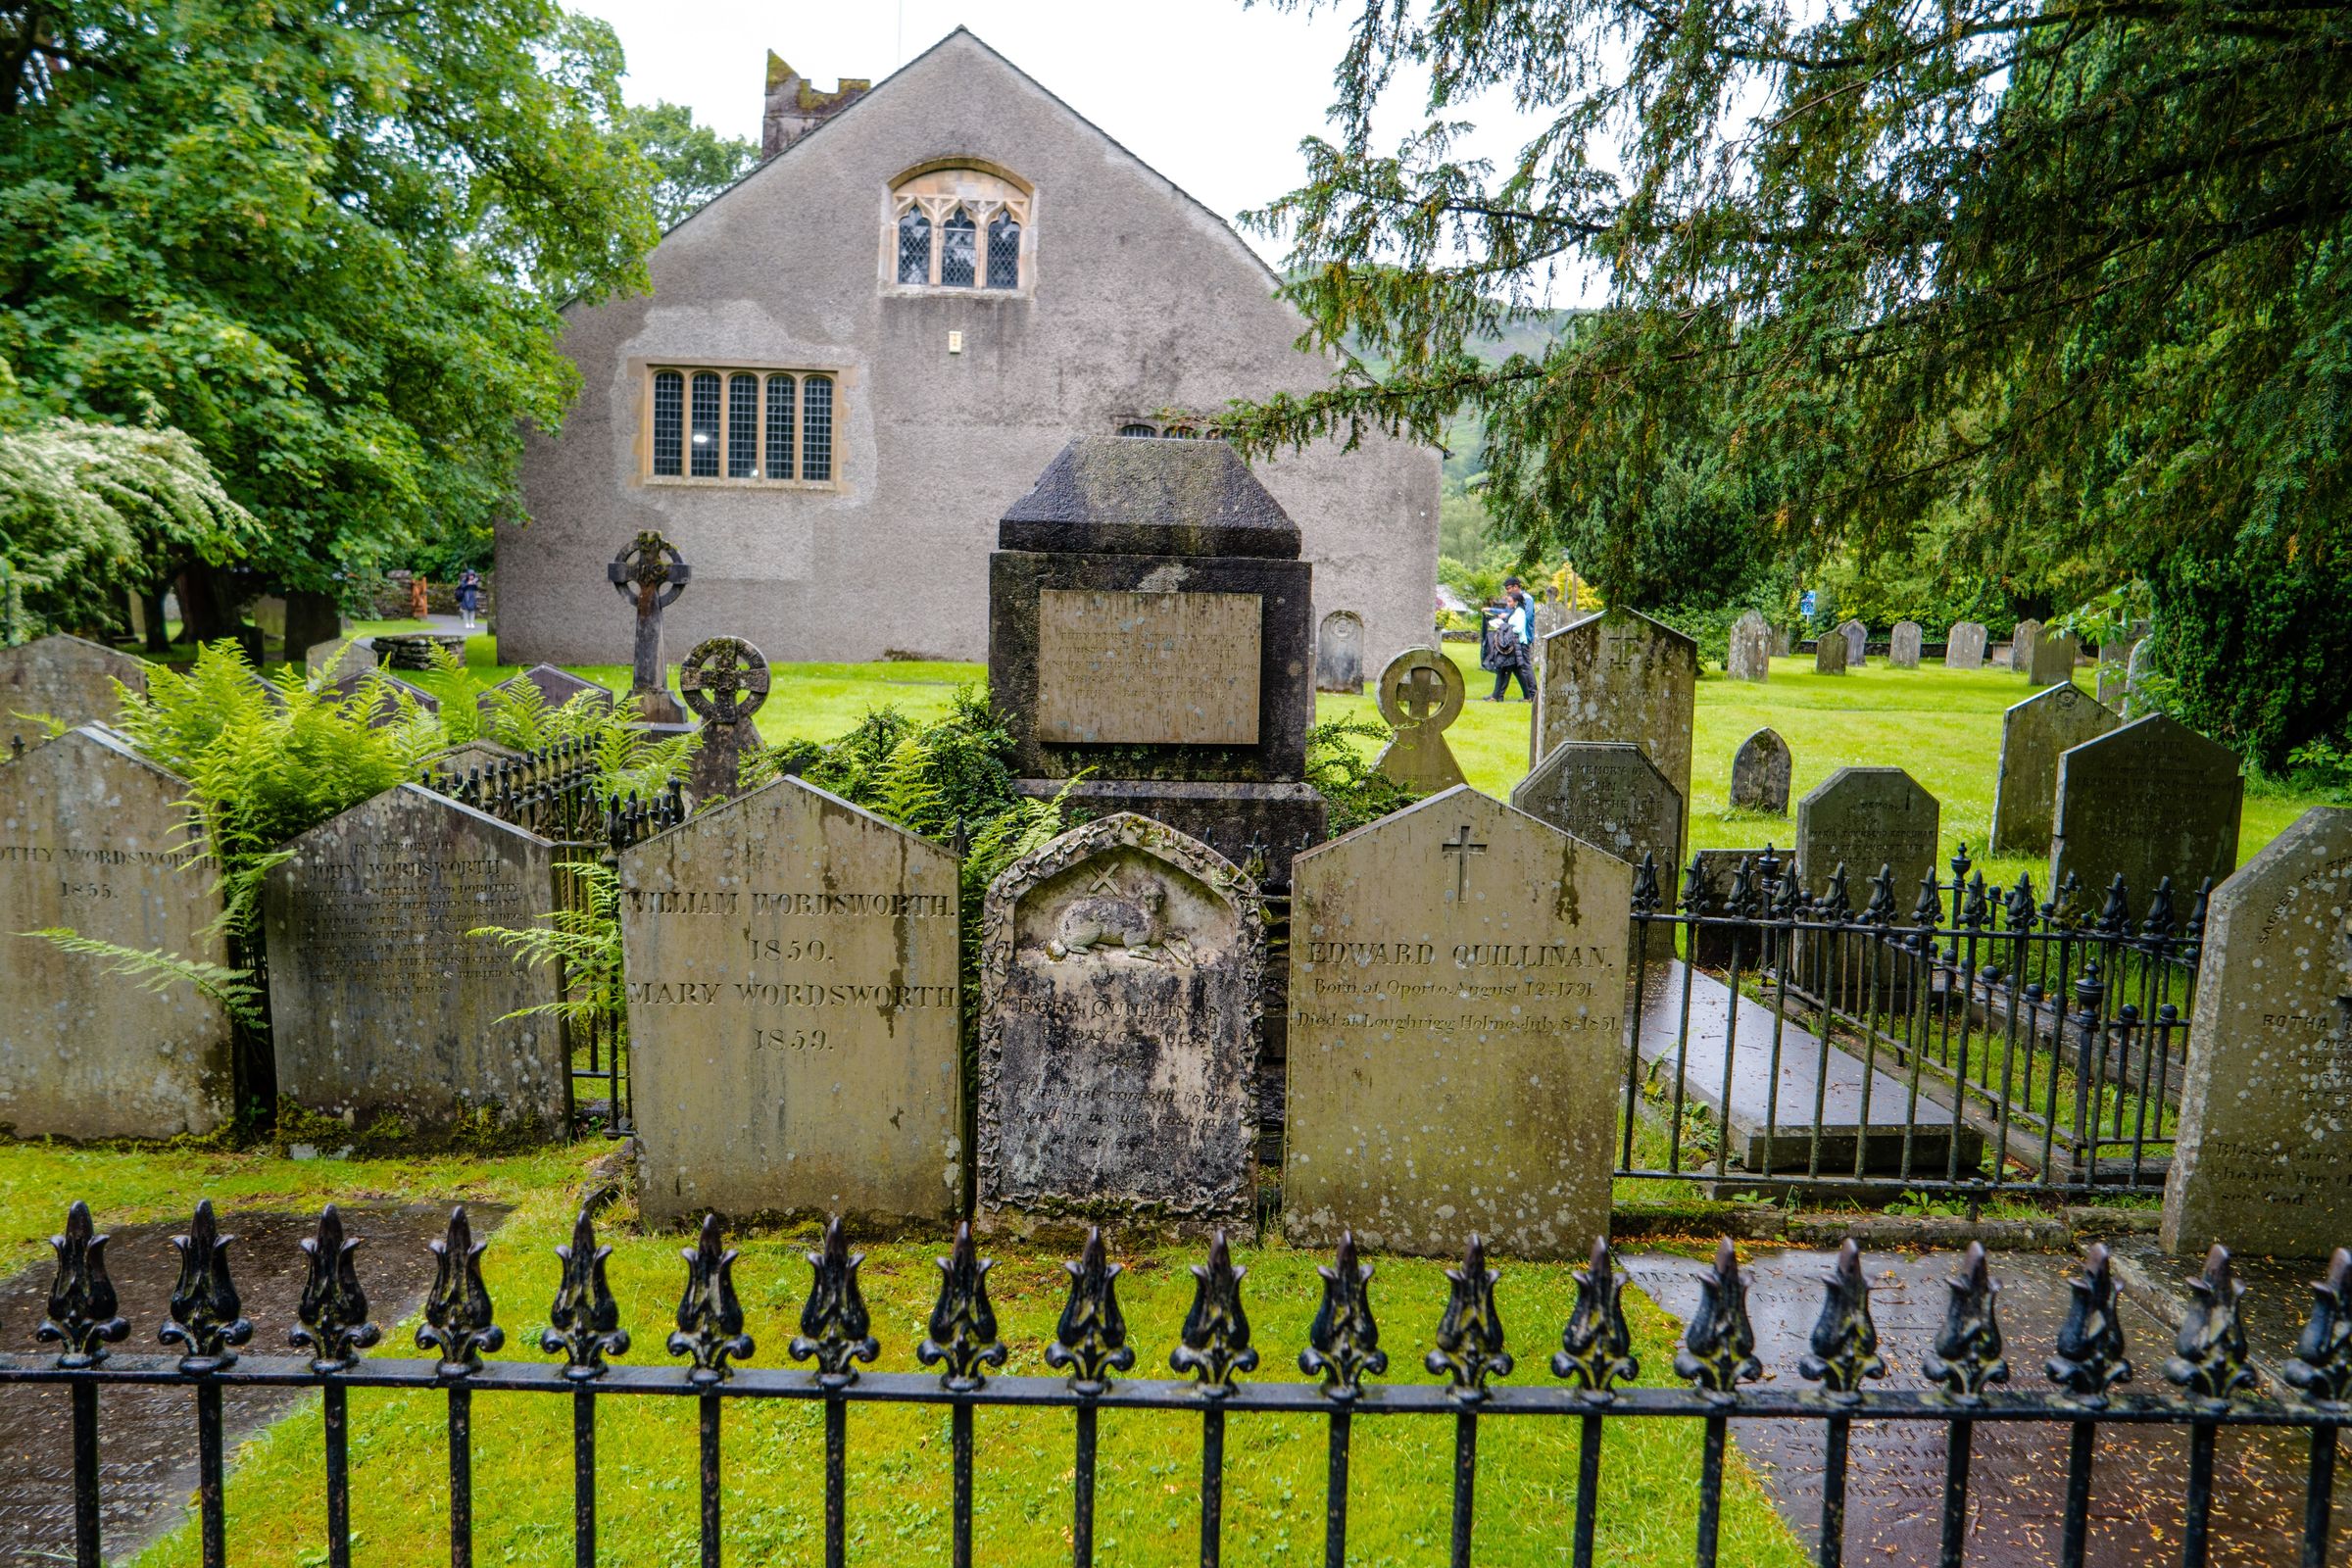 The tombstone of William Wordsworth